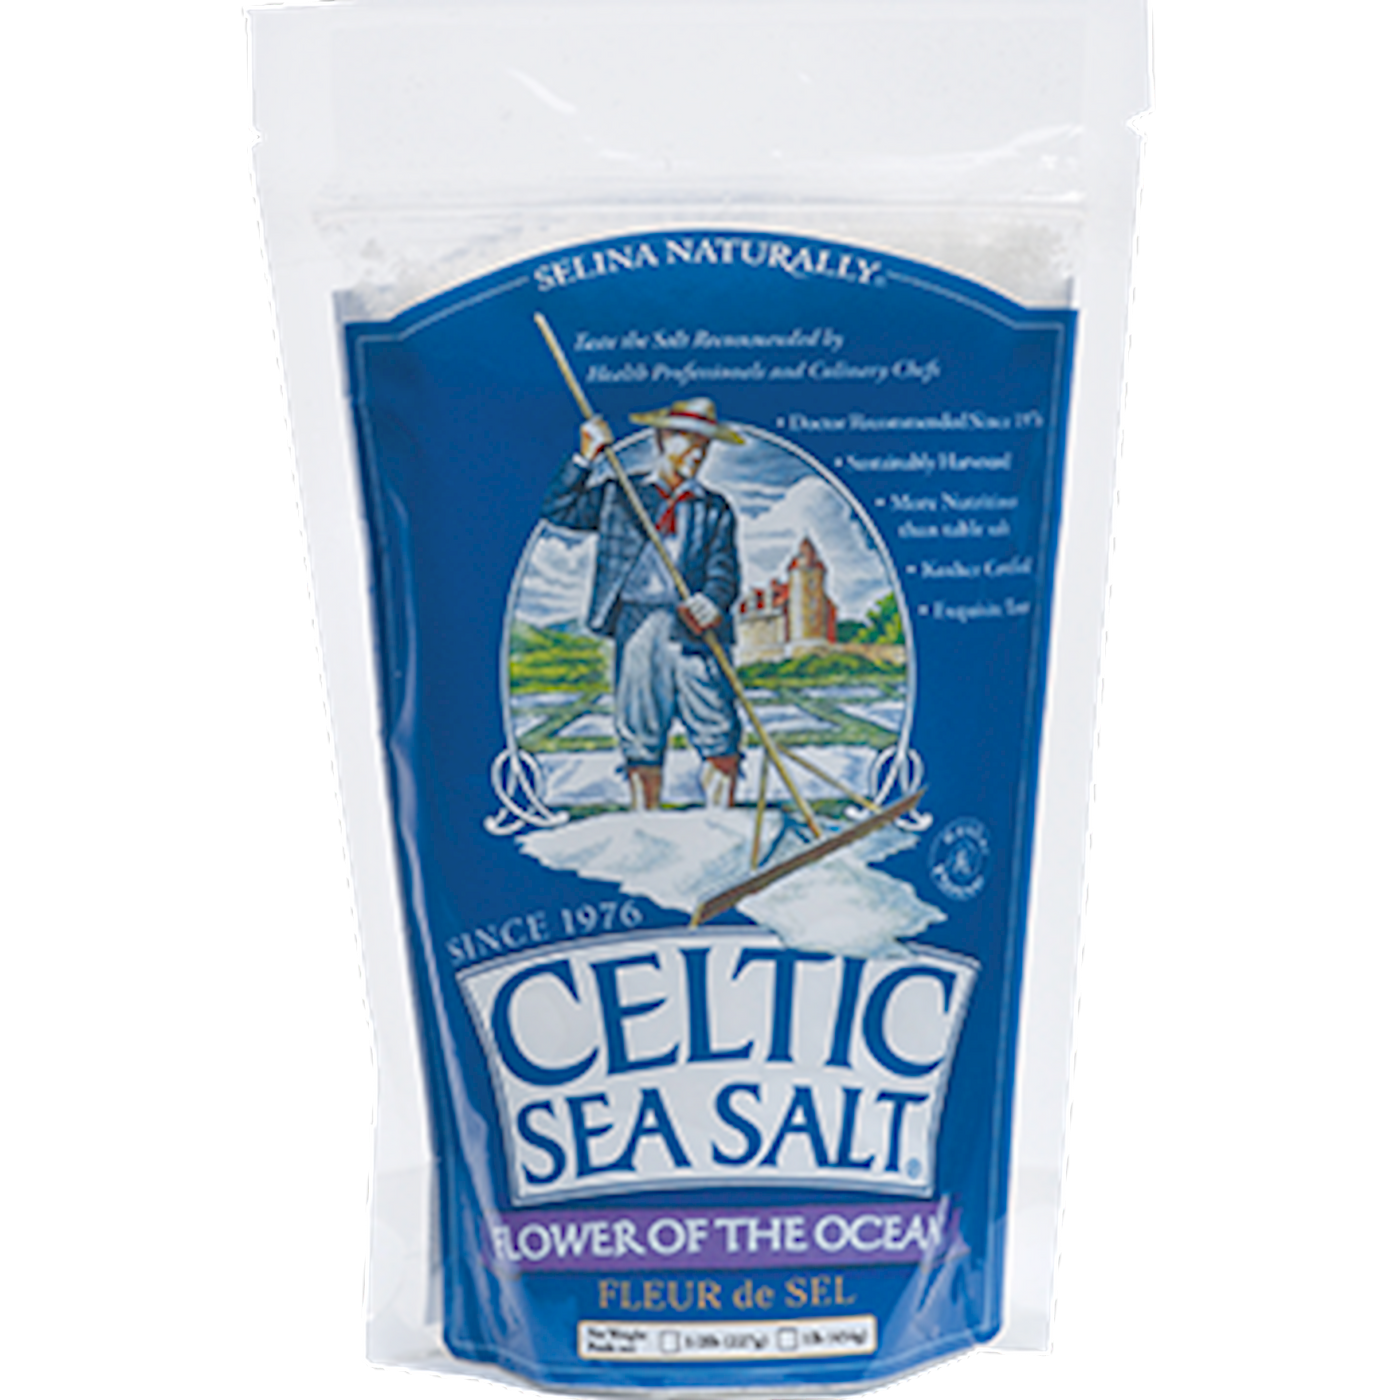 Flower of Ocean Celtic Sea Salt 1/2 lb Curated Wellness